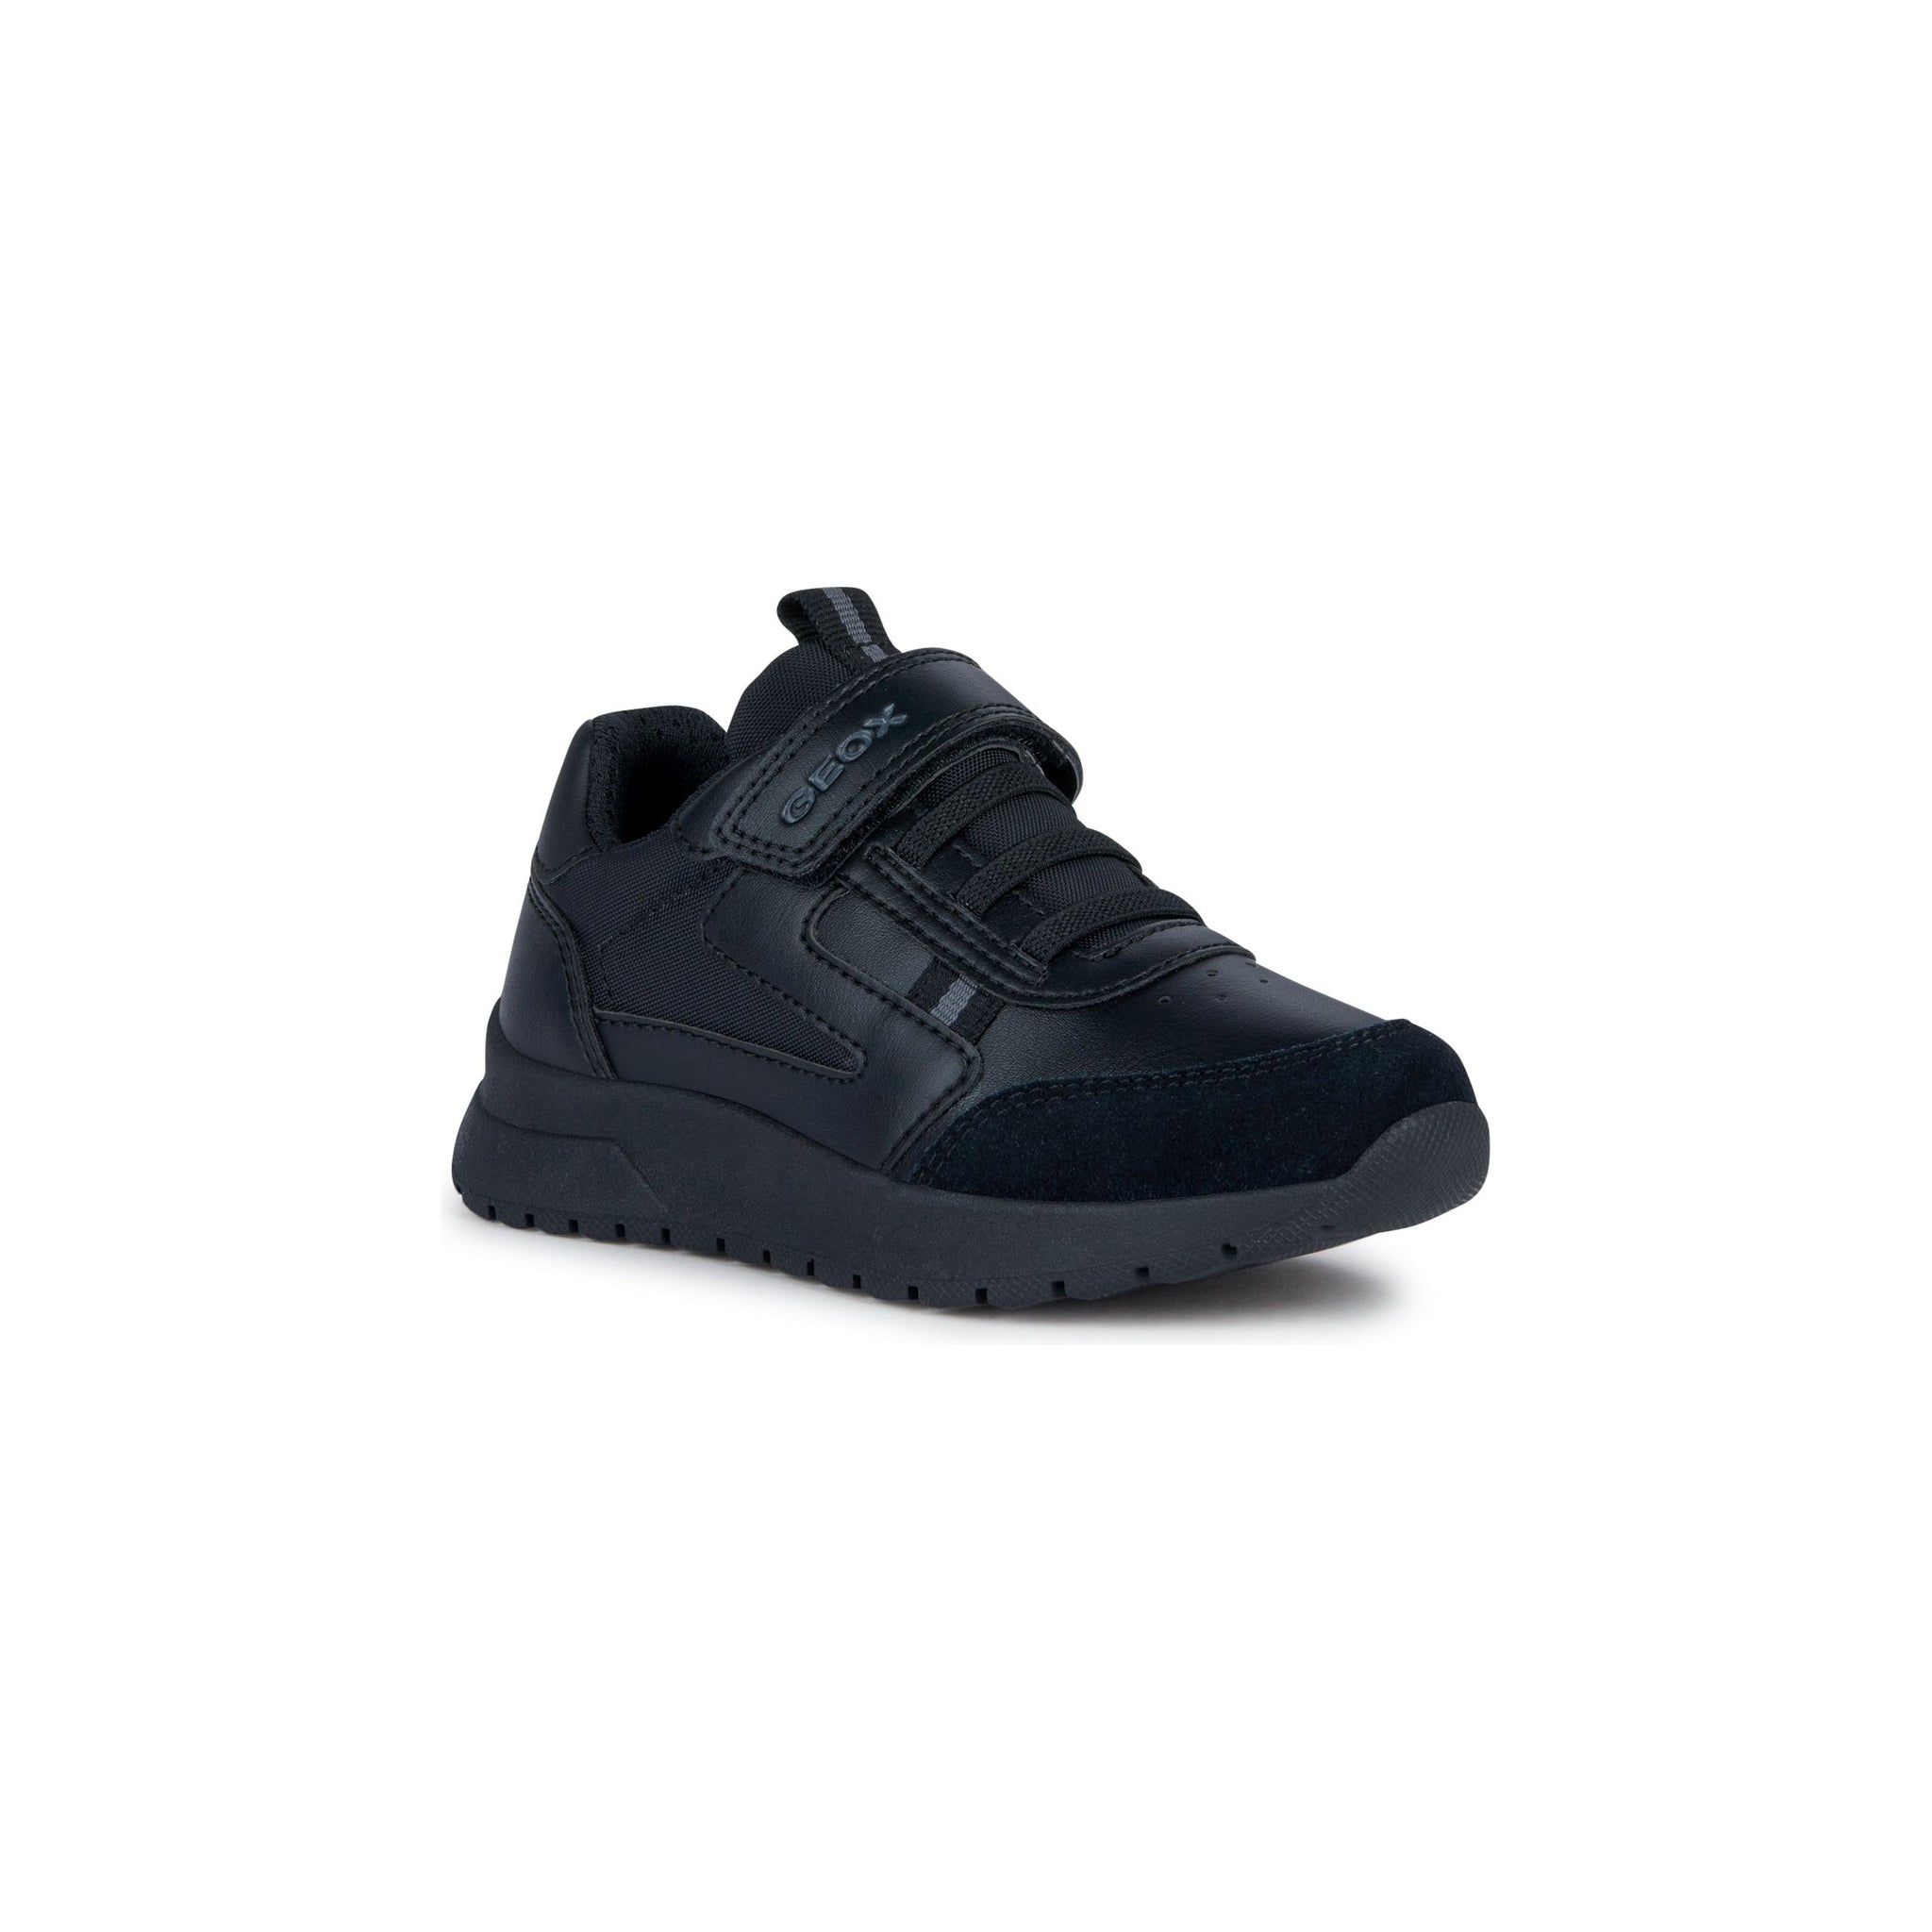 Geox Briezee - Kids Velcro Trainer in Black | Geox Shoes | Childrens Shoe Fitting | Wisemans | Bantry | West Cork | Ireland